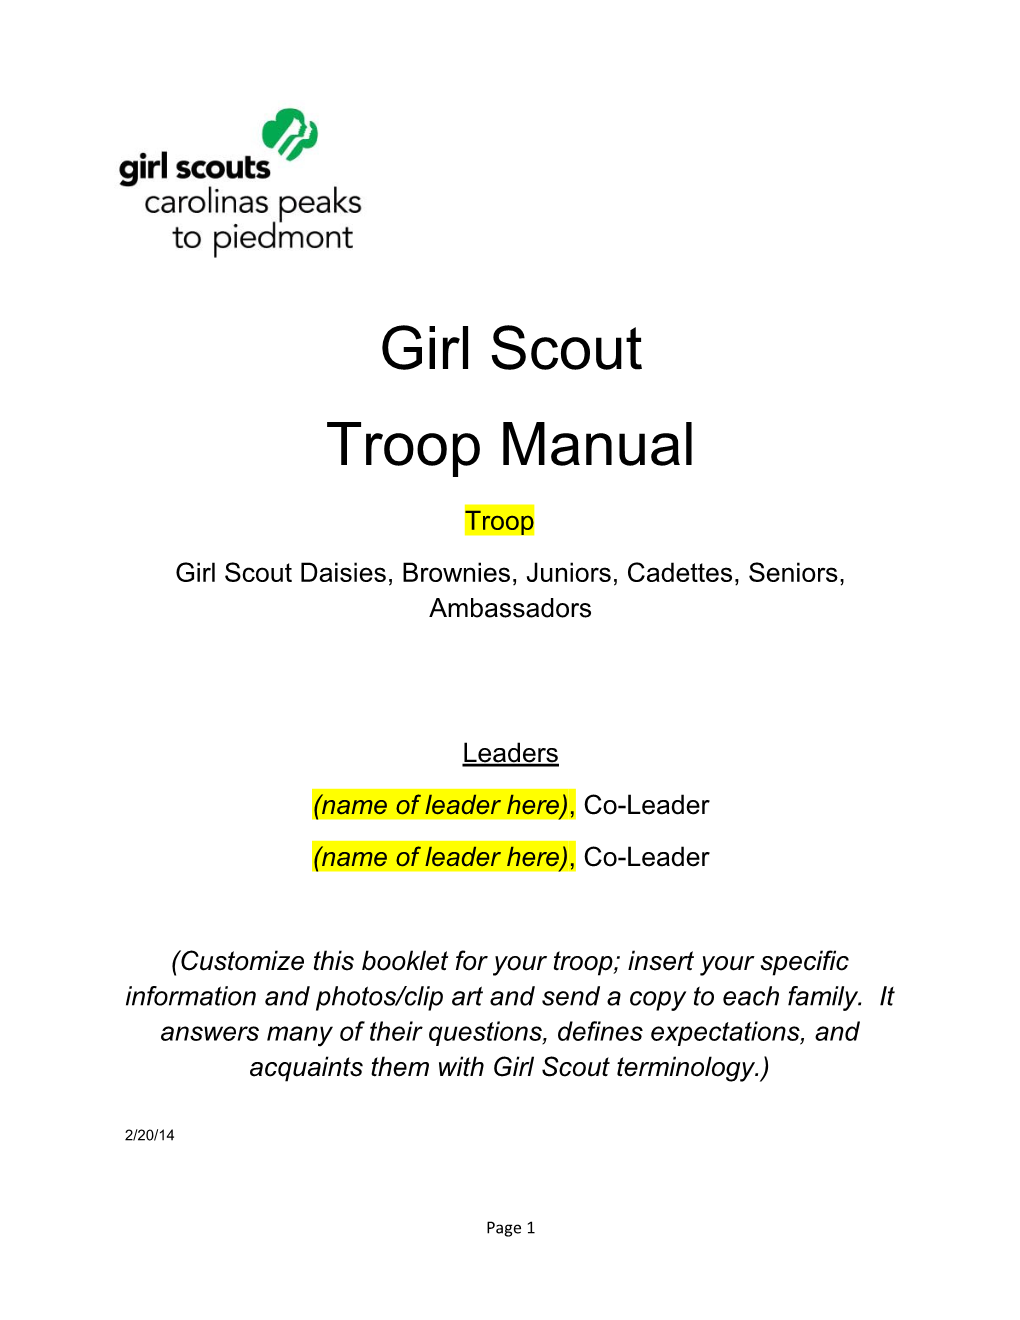 Girl Scout Daisies, Brownies, Juniors, Cadettes, Seniors, Ambassadors